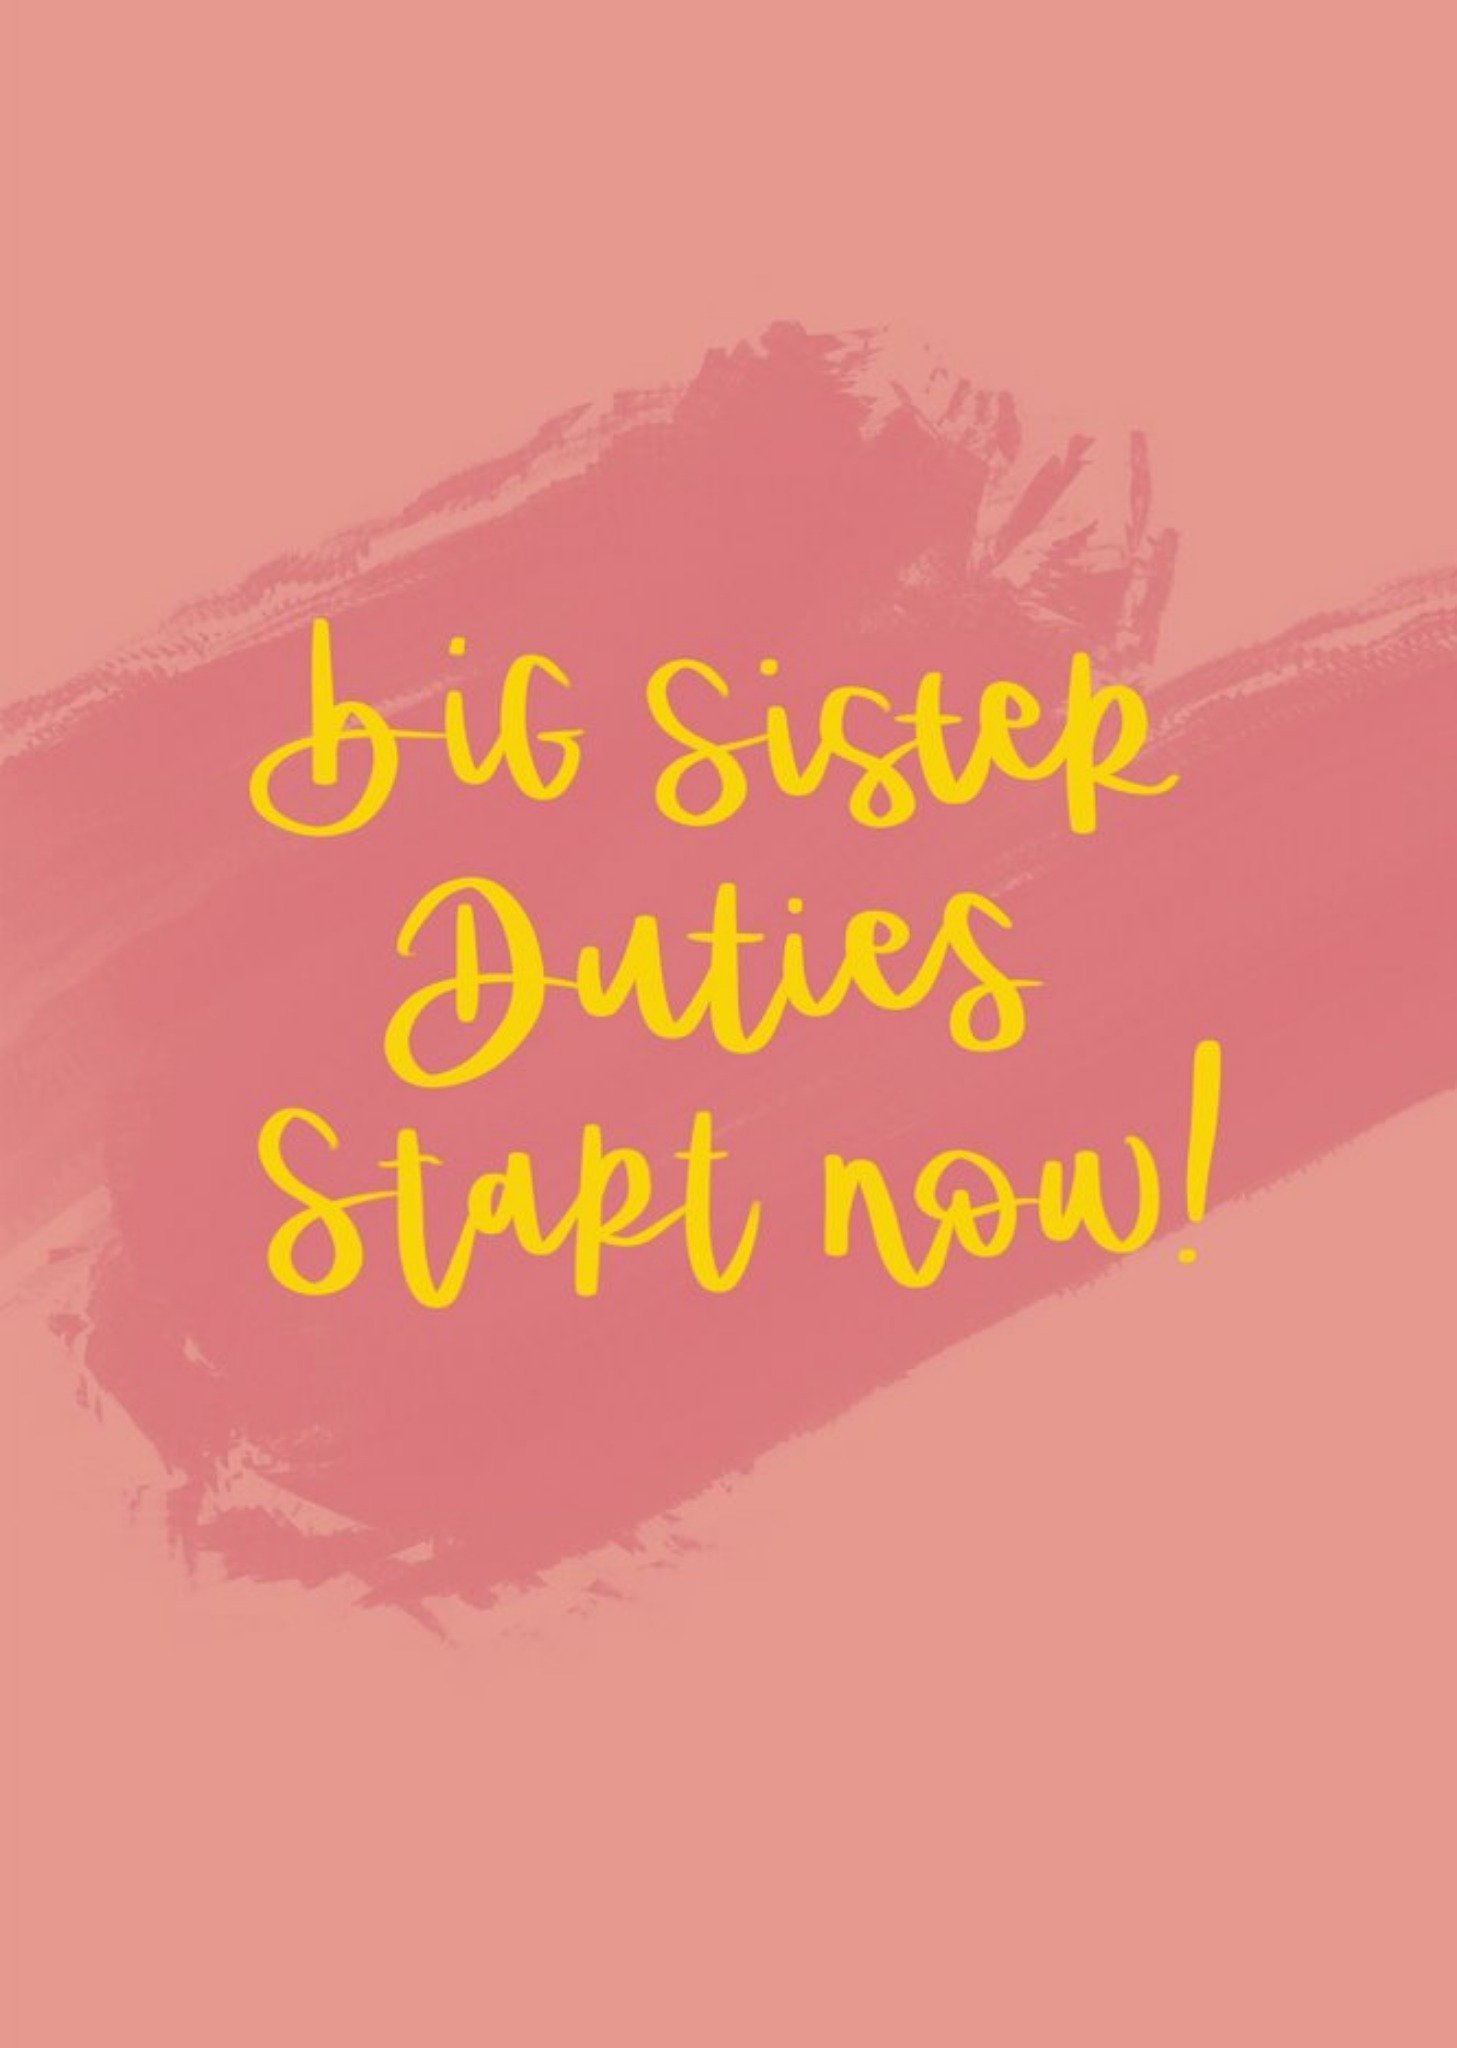 Moonpig Handwritten Typography On A Pink Background Big Sister Duties Start Now Card Ecard